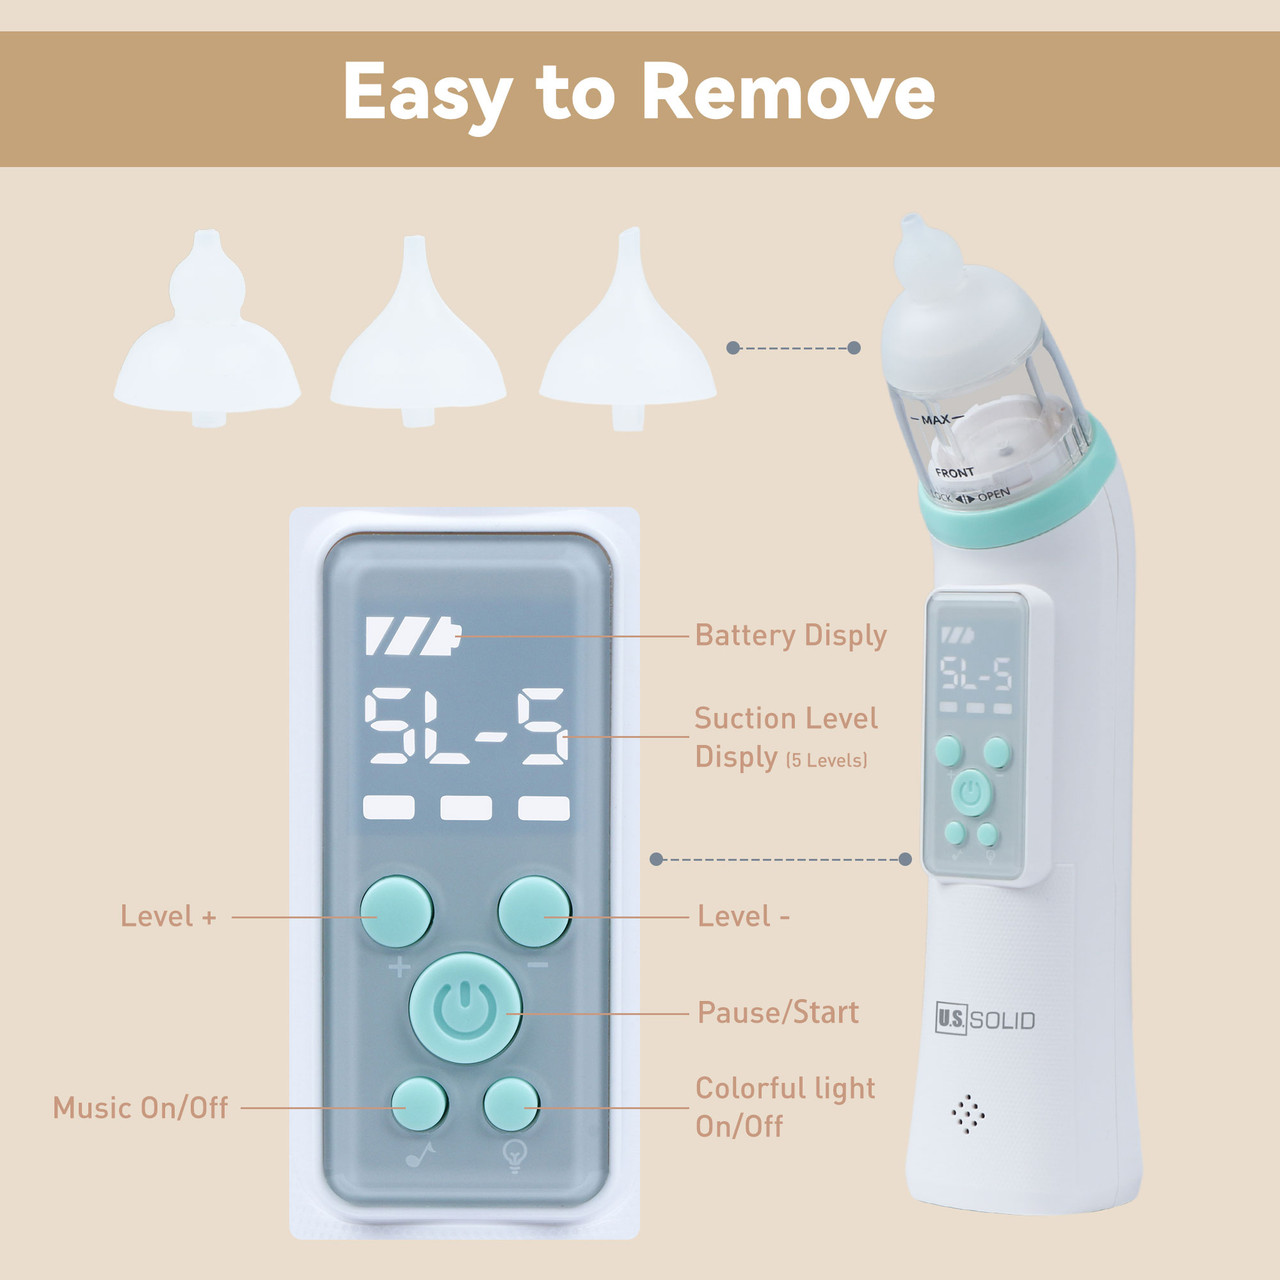 Electric Baby Nasal Aspirator, Upgrade Nose Sucker for Baby